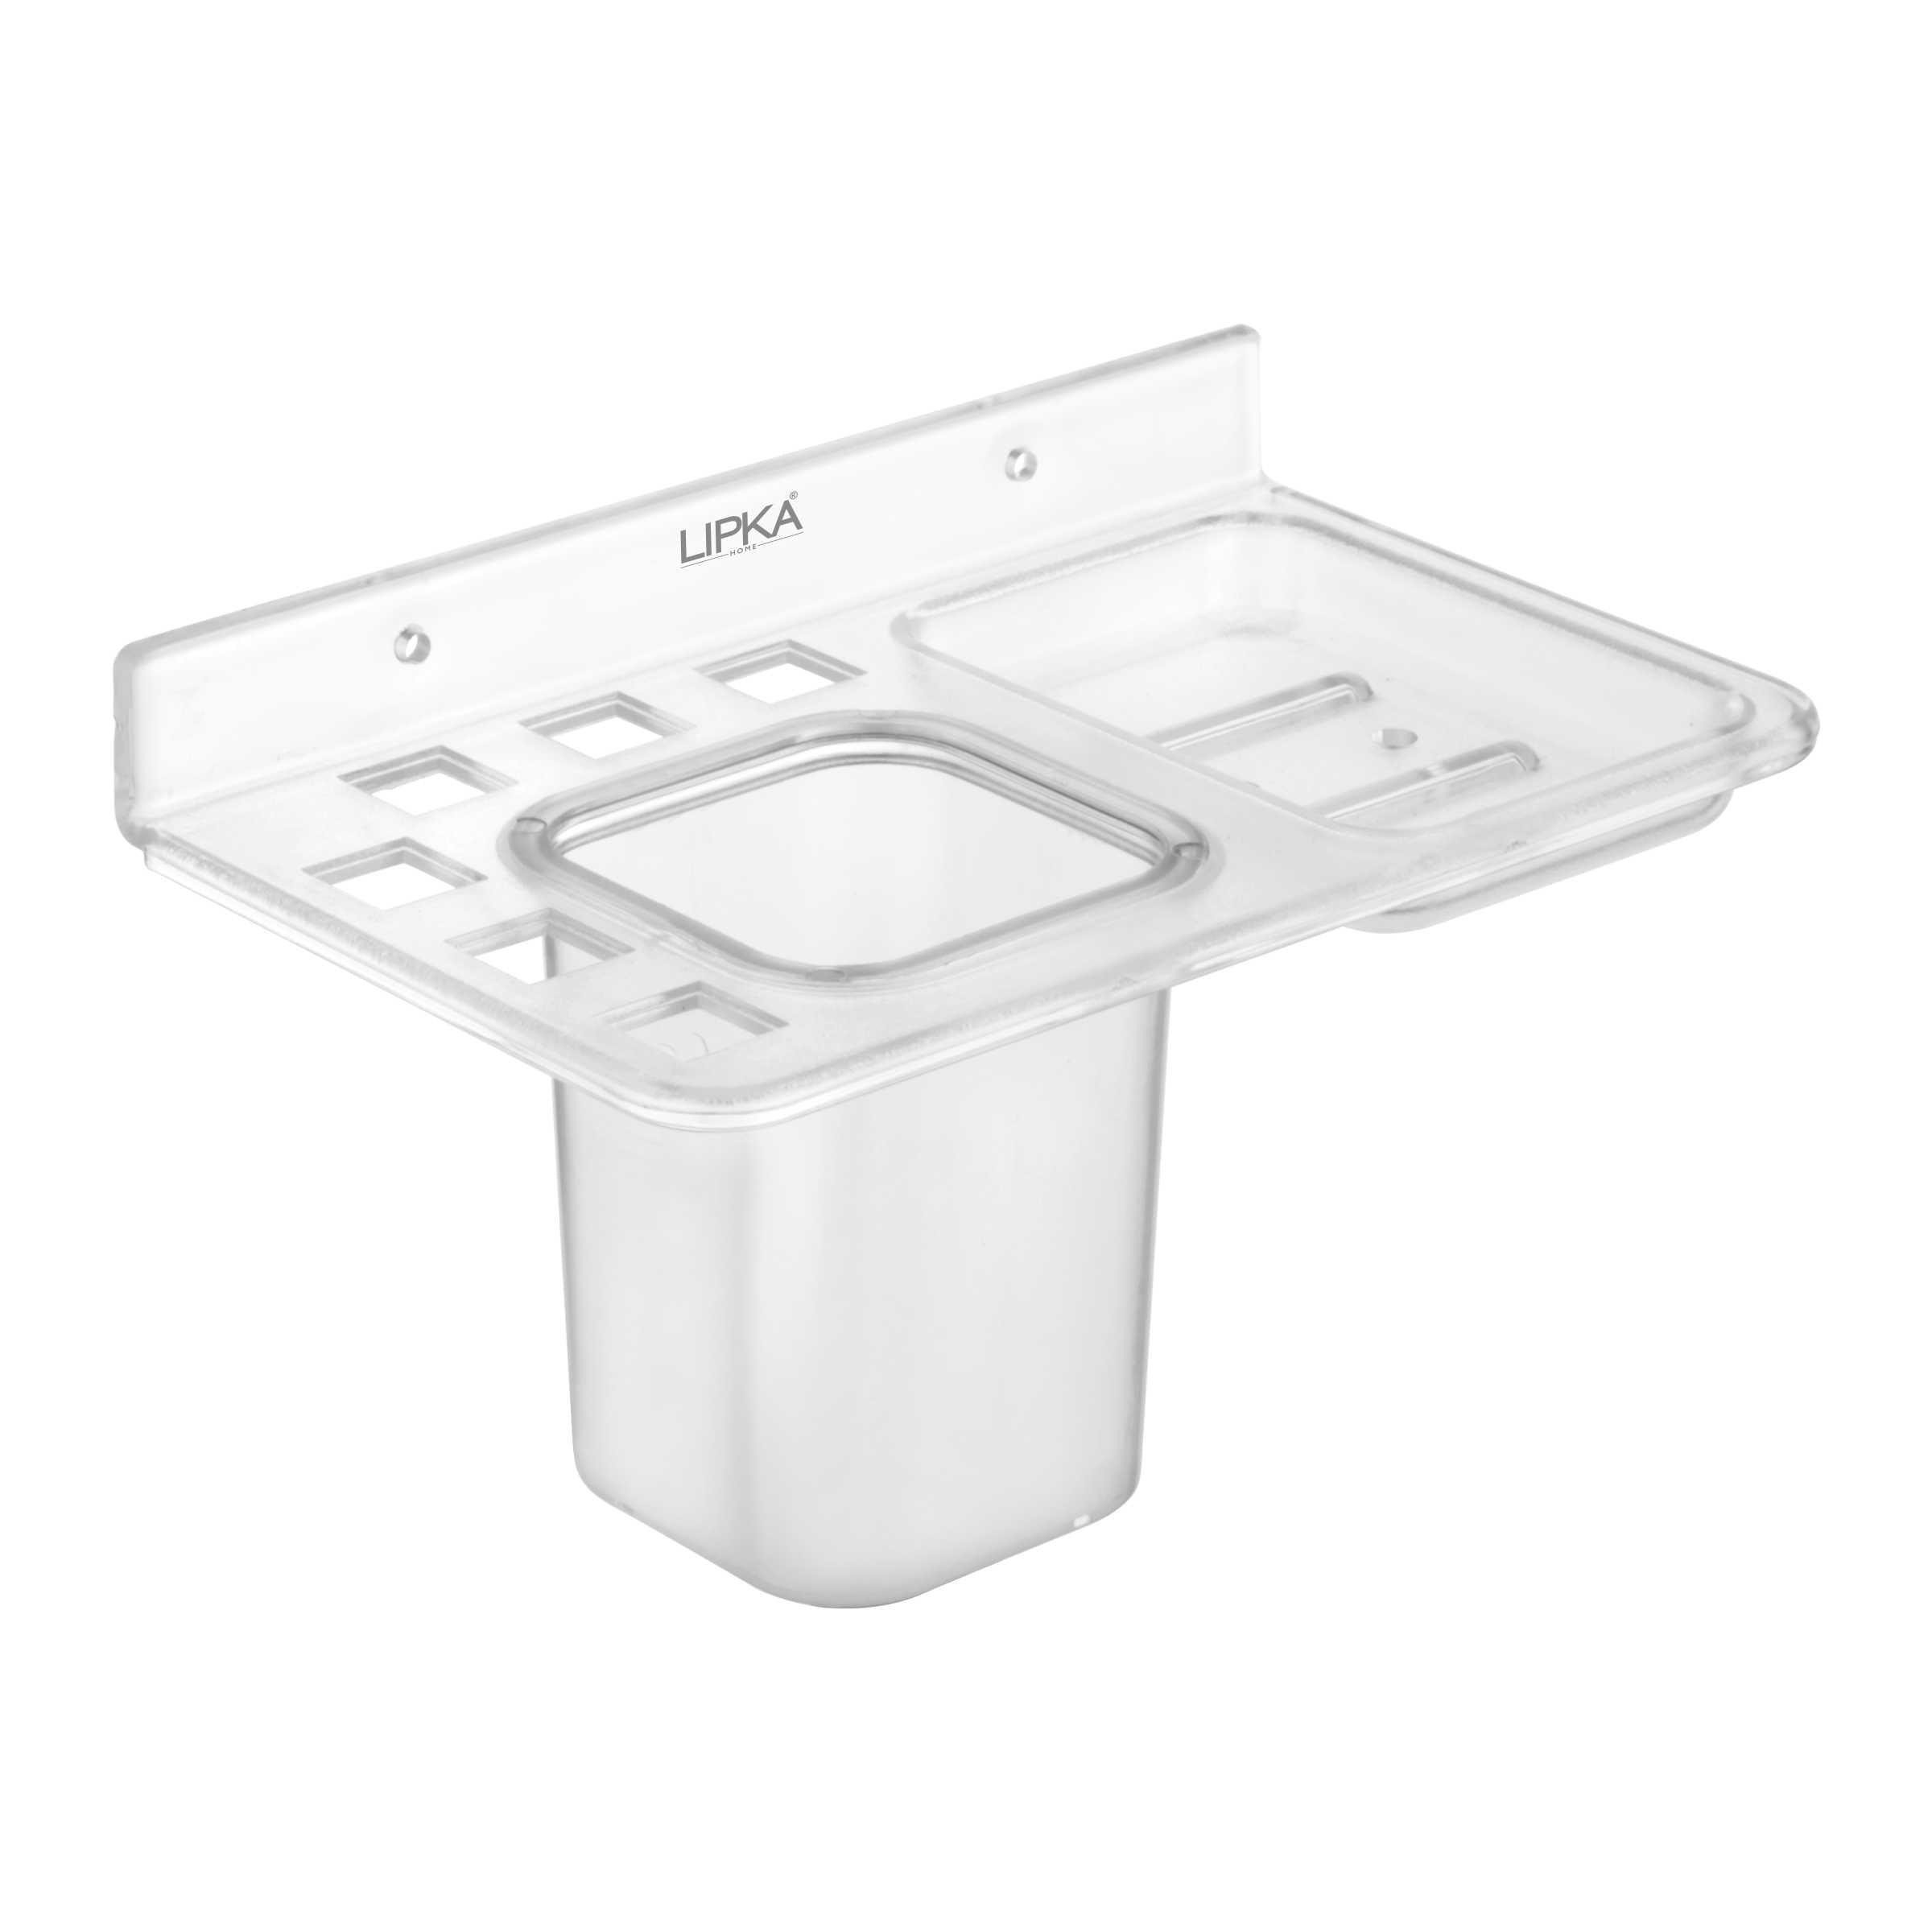 3-in-1 Shelf Tray (Tumbler, Toothbrush Holder & Soap Dish)